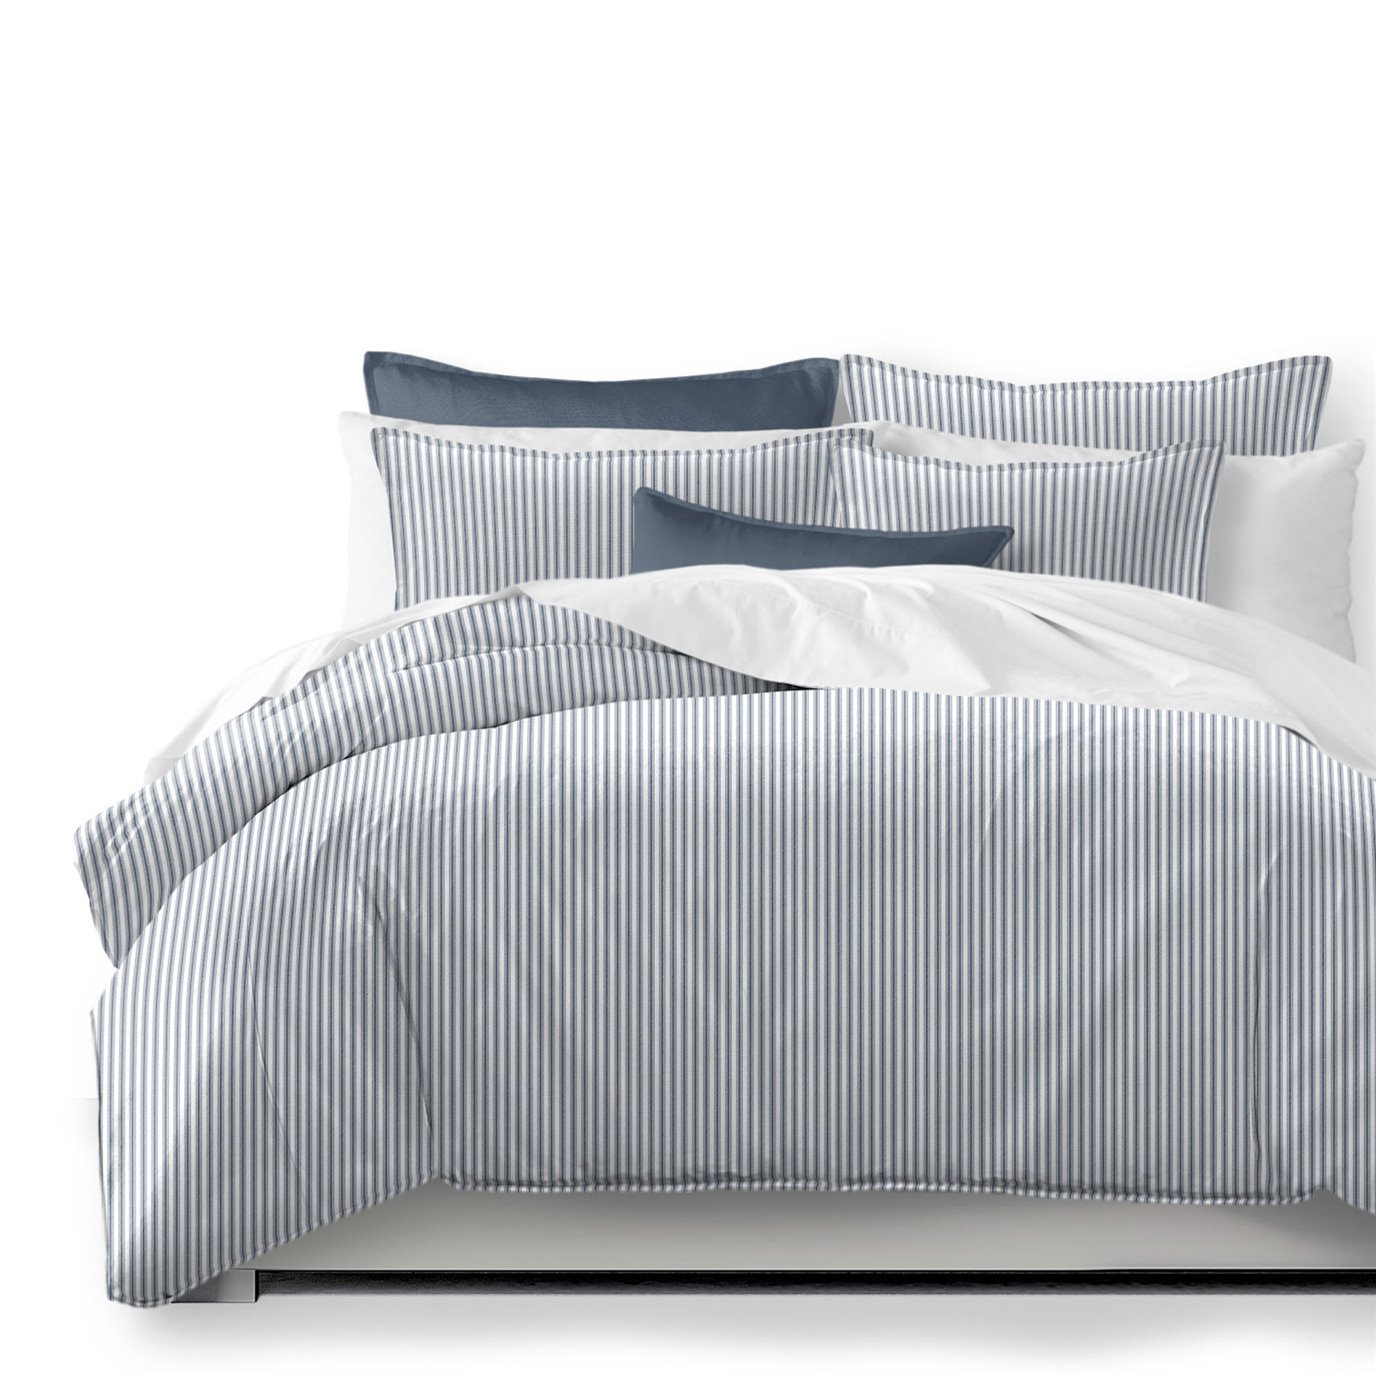 Cruz Ticking Stripes White/Navy Comforter and Pillow Sham(s) Set - Size Twin